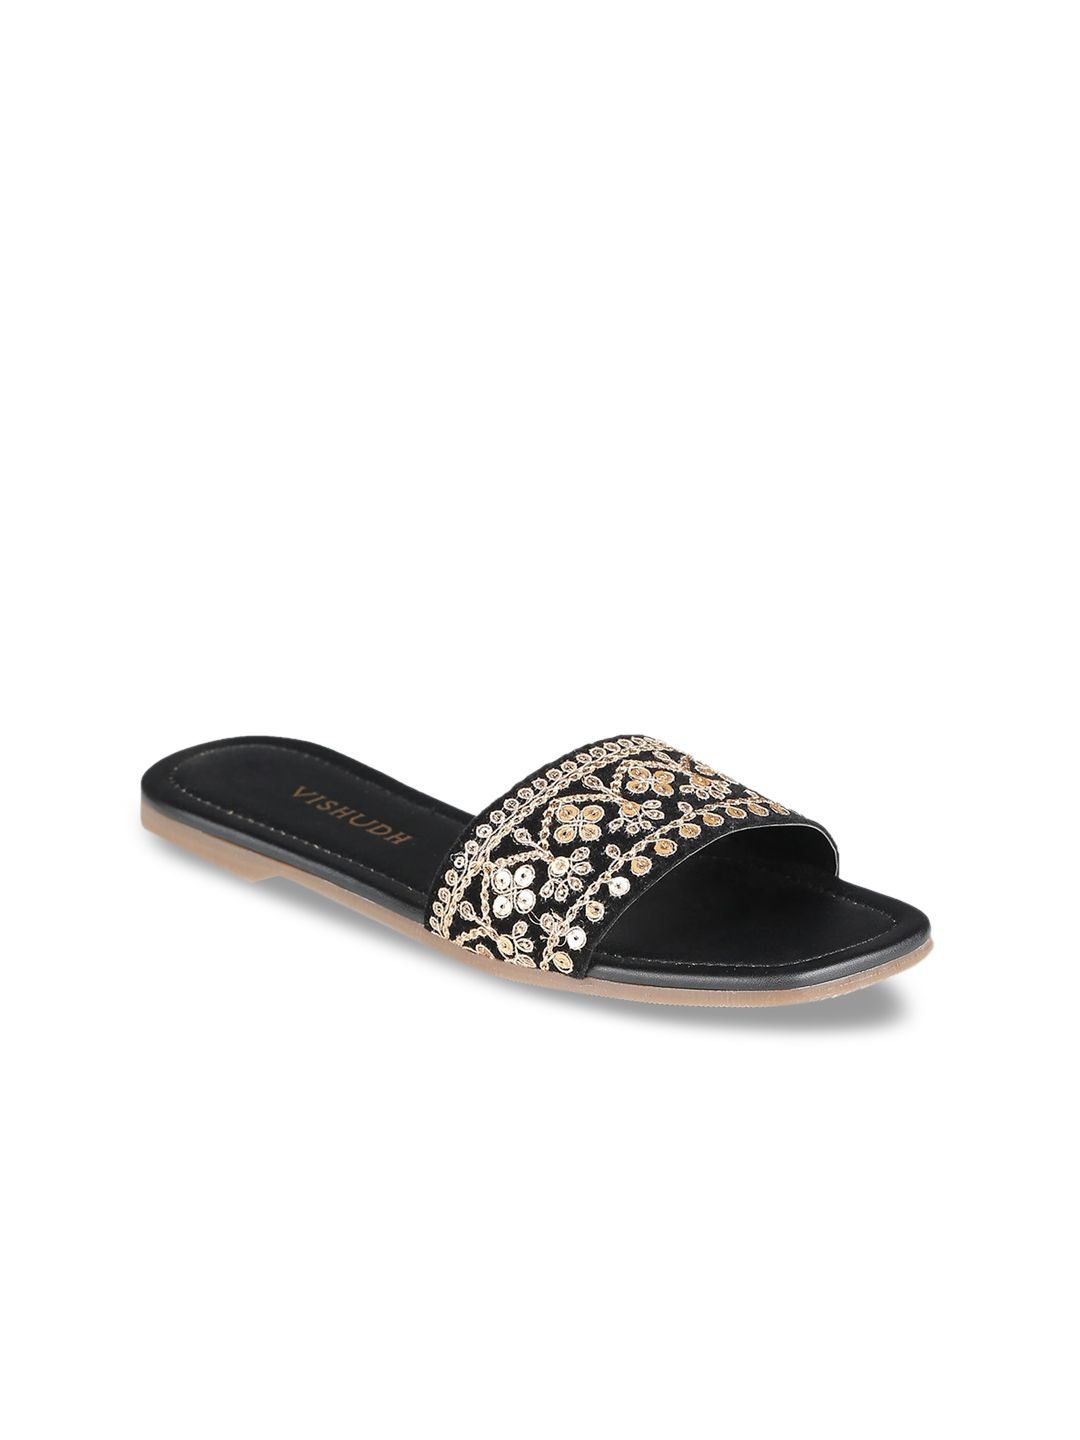 Vishudh Women Black & Gold-Toned Embellished Open Toe Flats Price in India